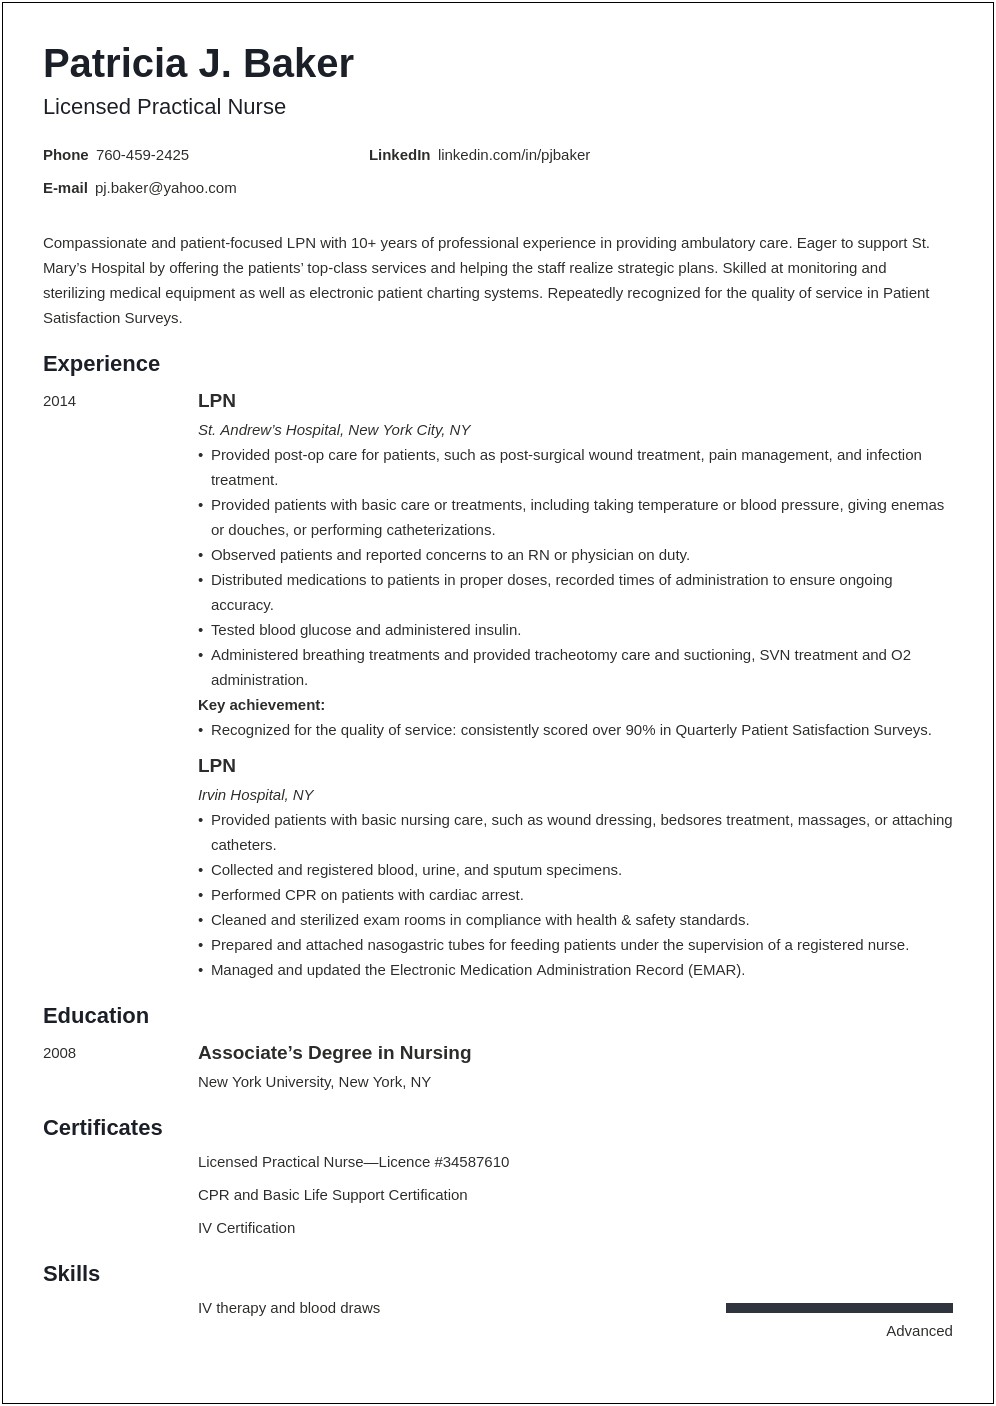 Resume For Entrance Job As Lpn